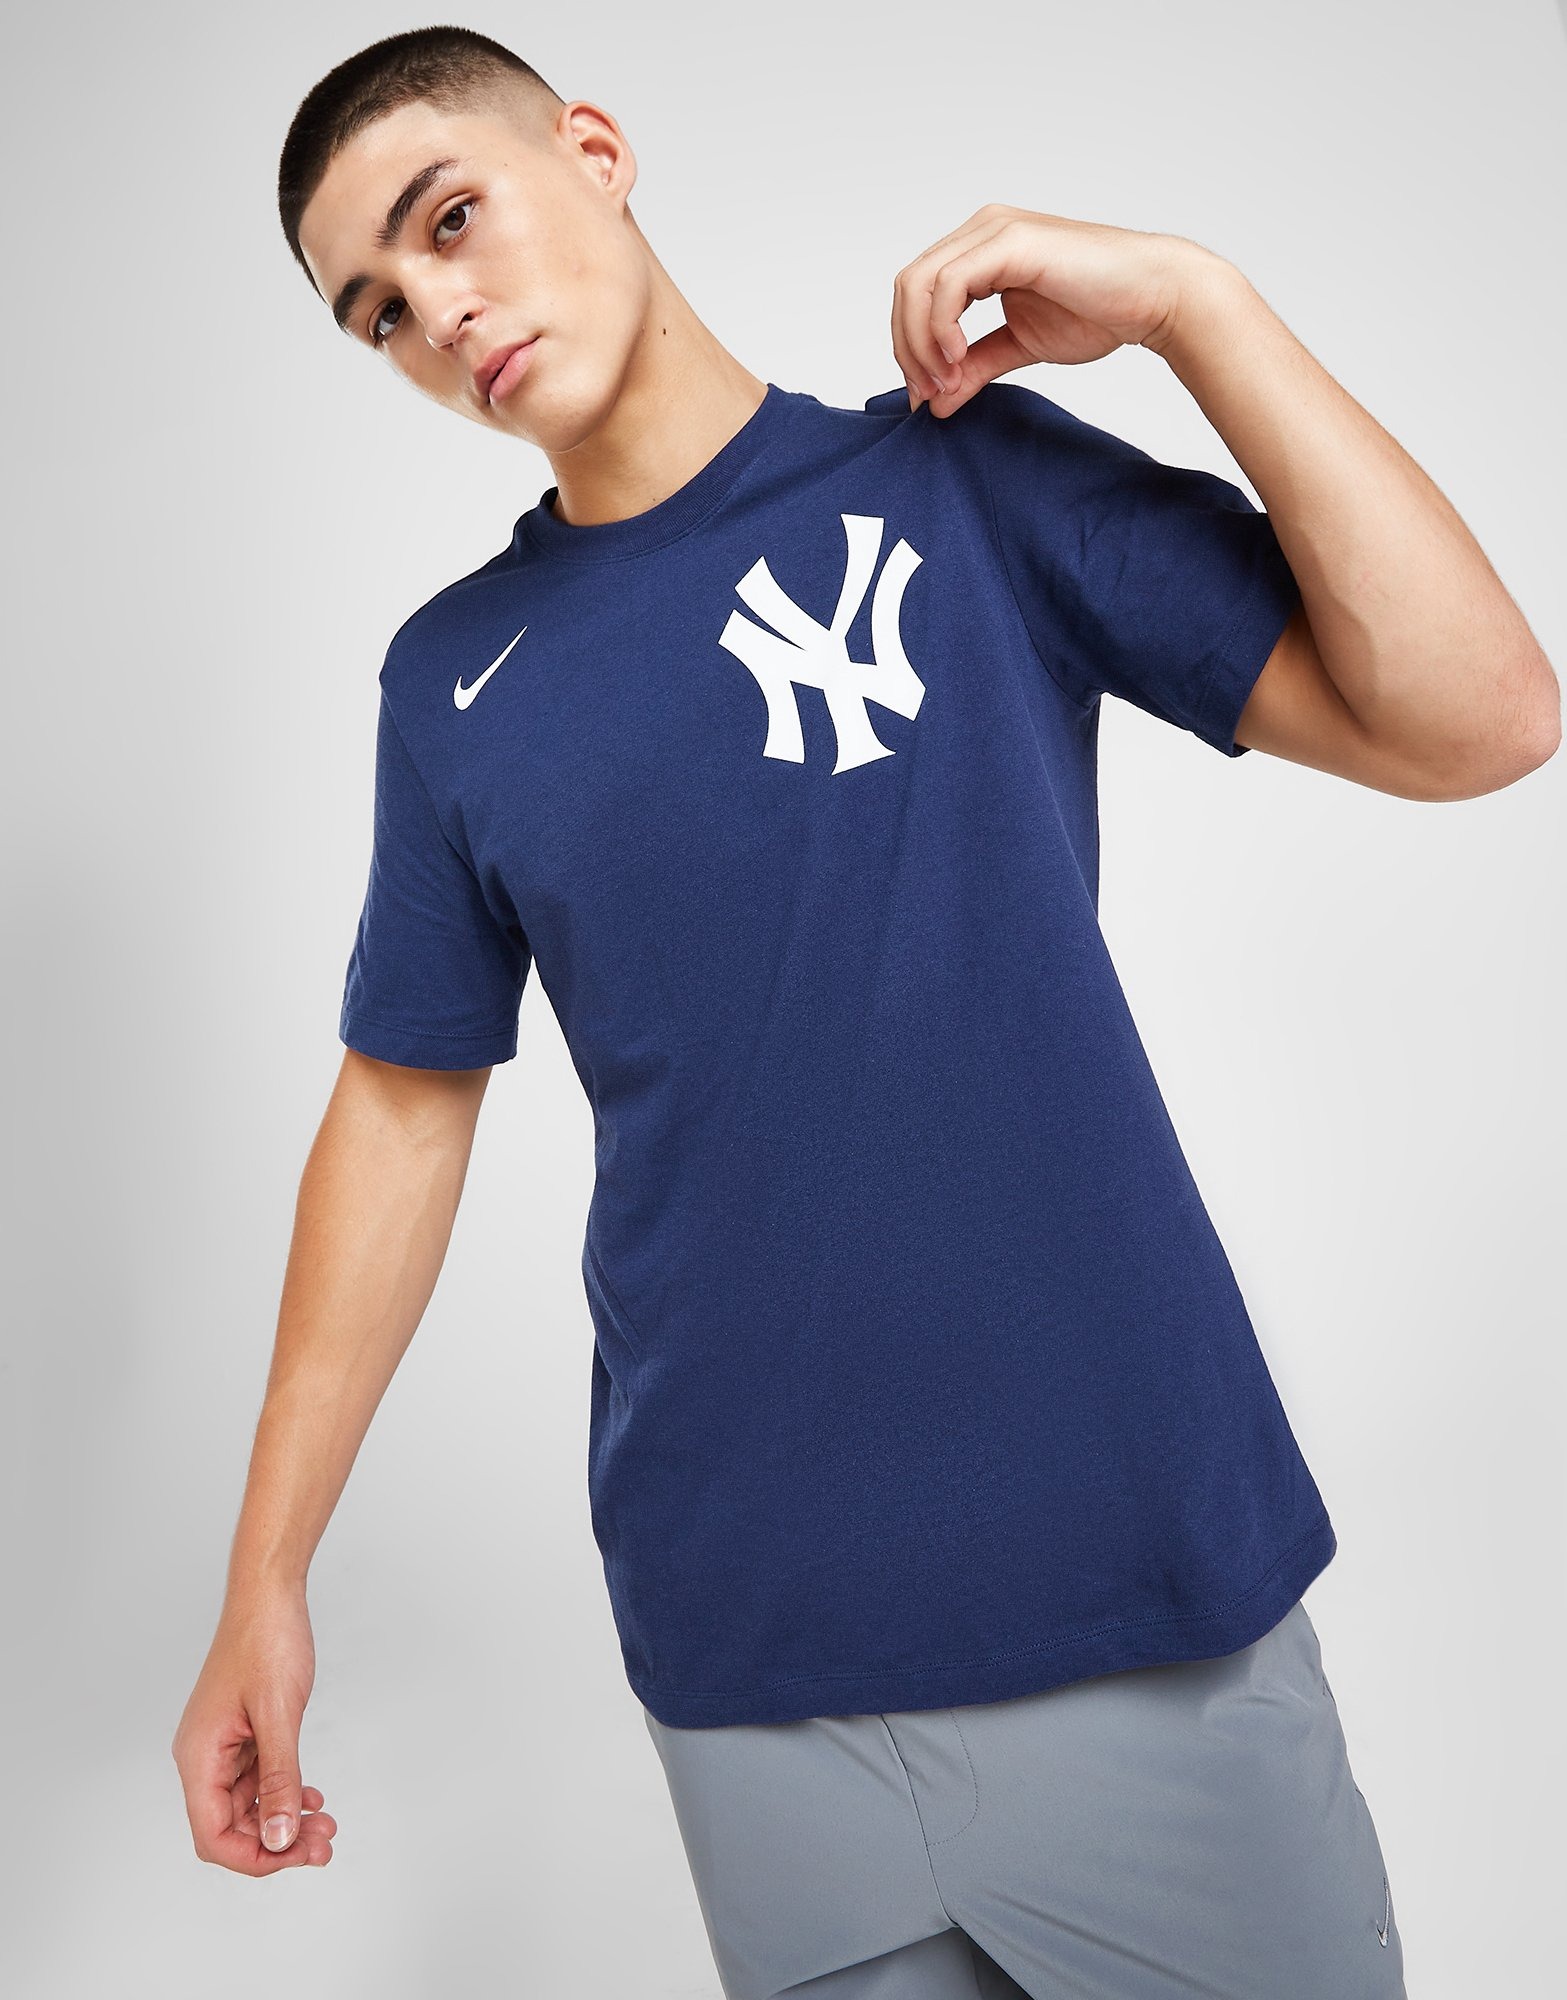 Nike Yankee T-Shirt in 2023  Yankees t shirt, Shirts, Shirt shop